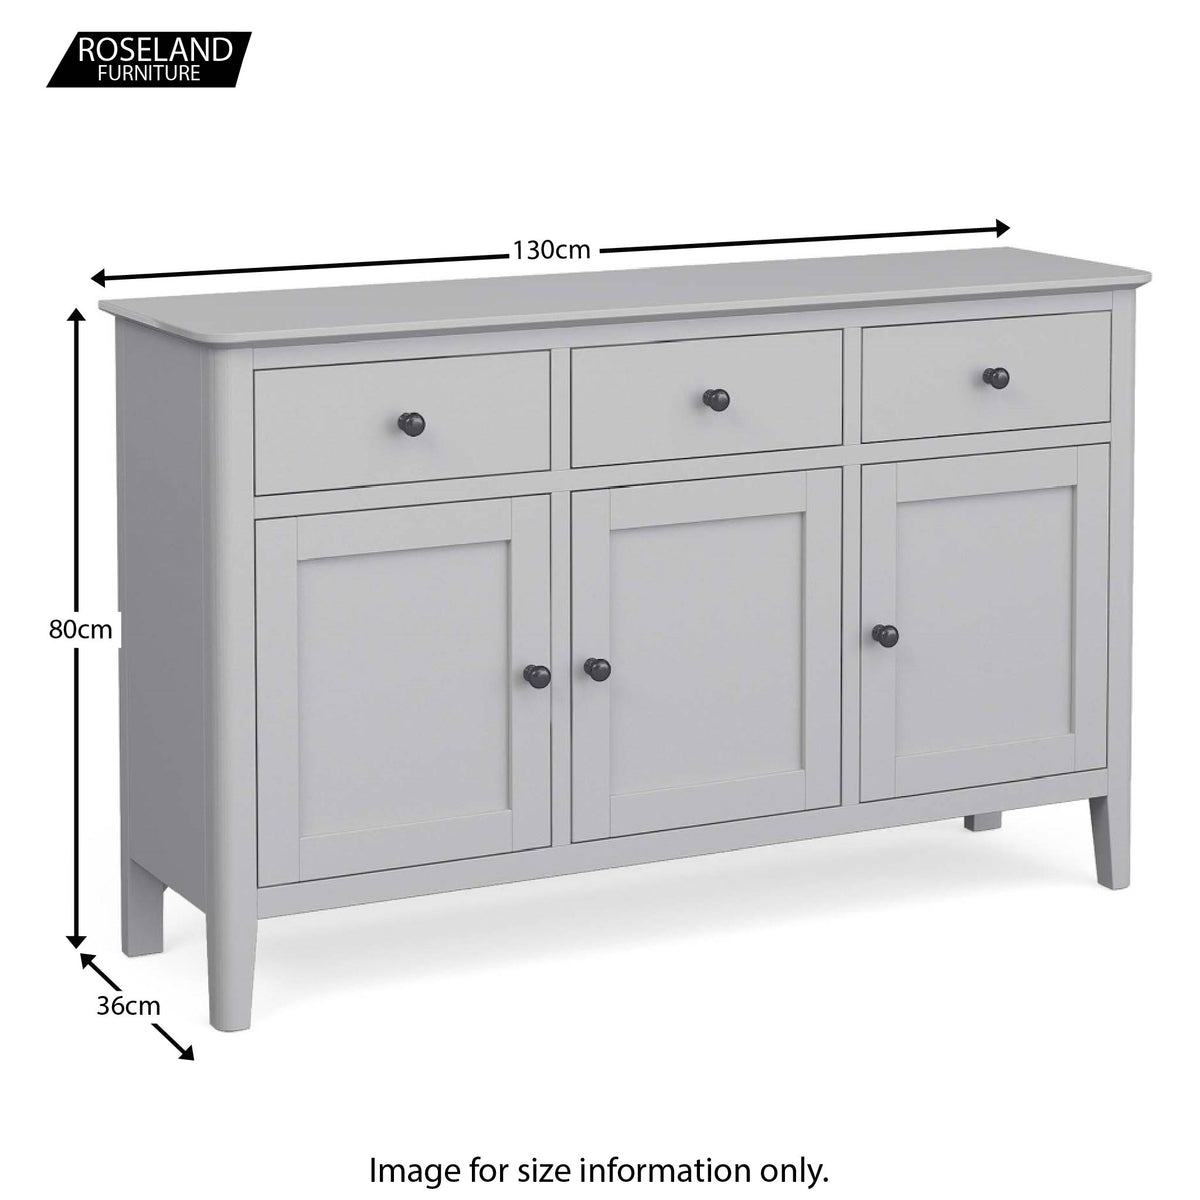 Elgin Grey Large Sideboard Cabinet size guide